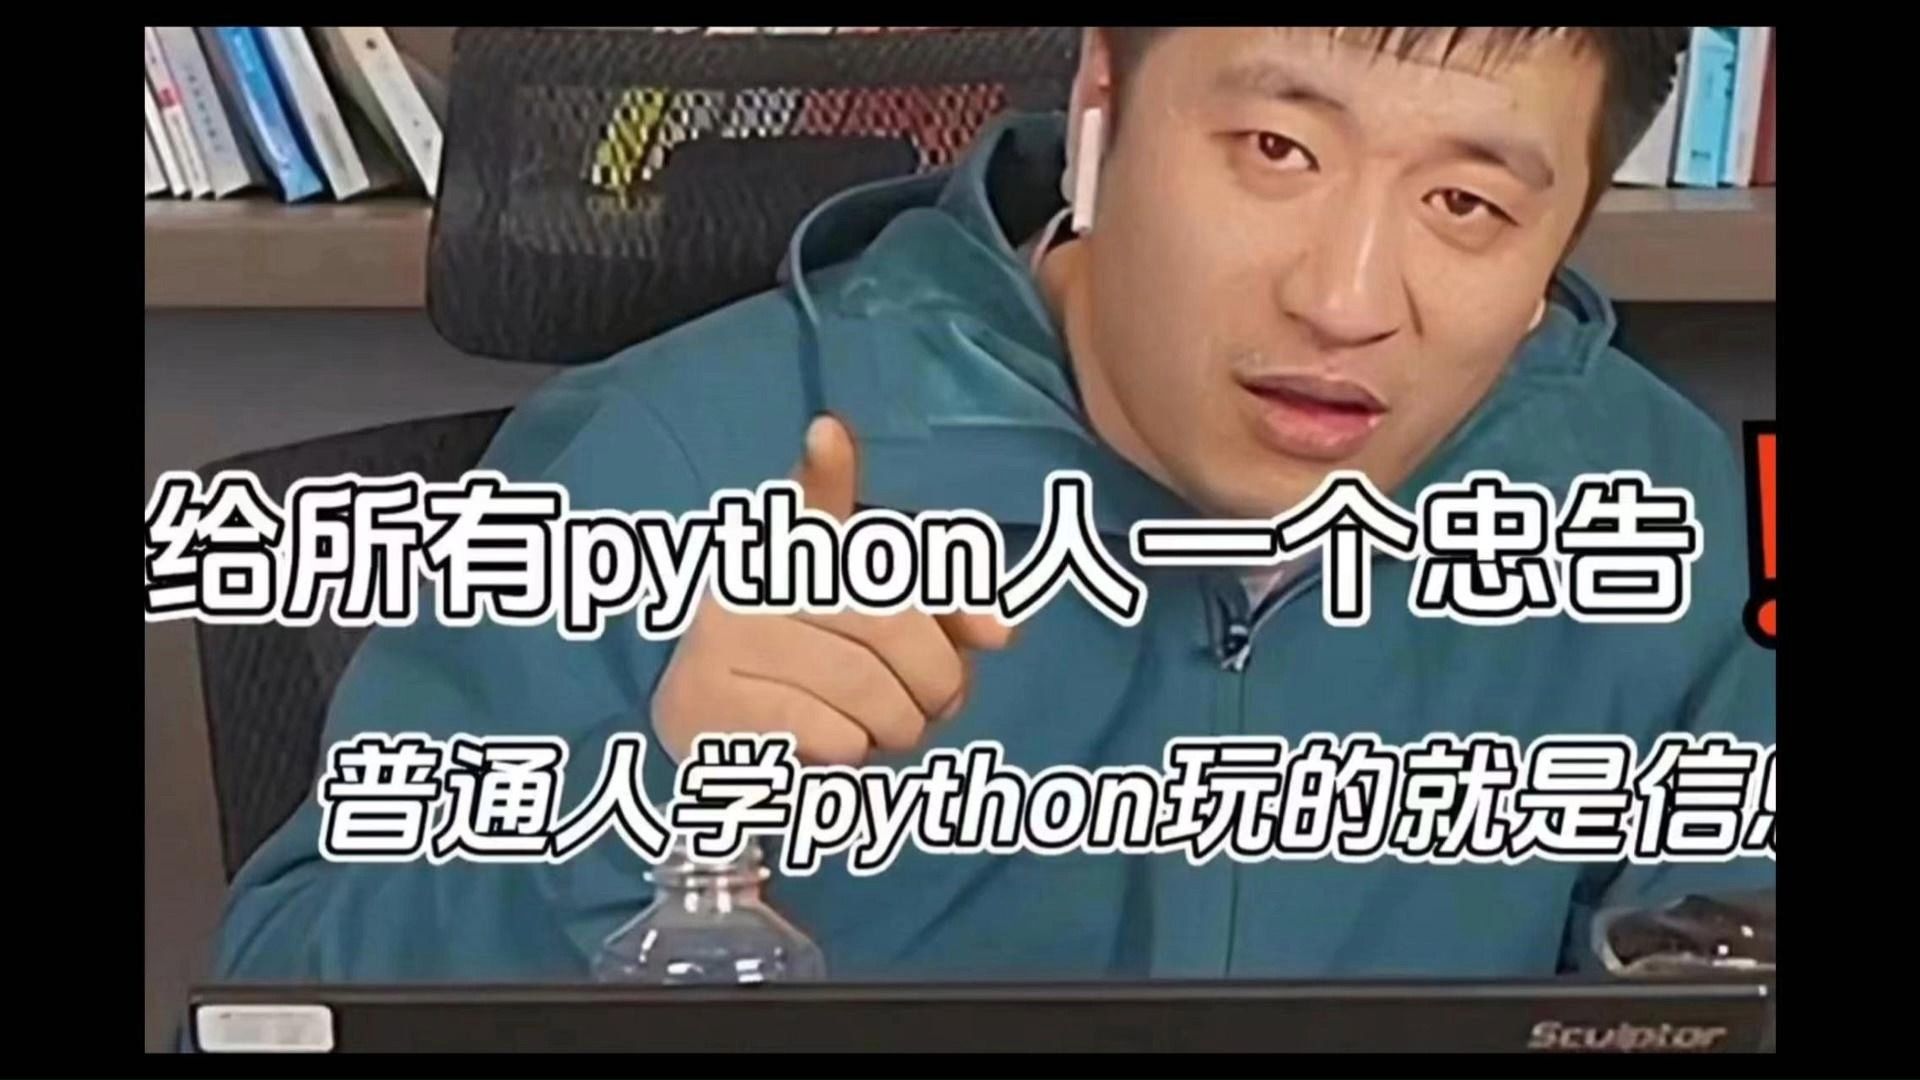 【Python学习】张雪峰：给所以Python人一个忠告，普通人学Python玩的就是信息差！！！（